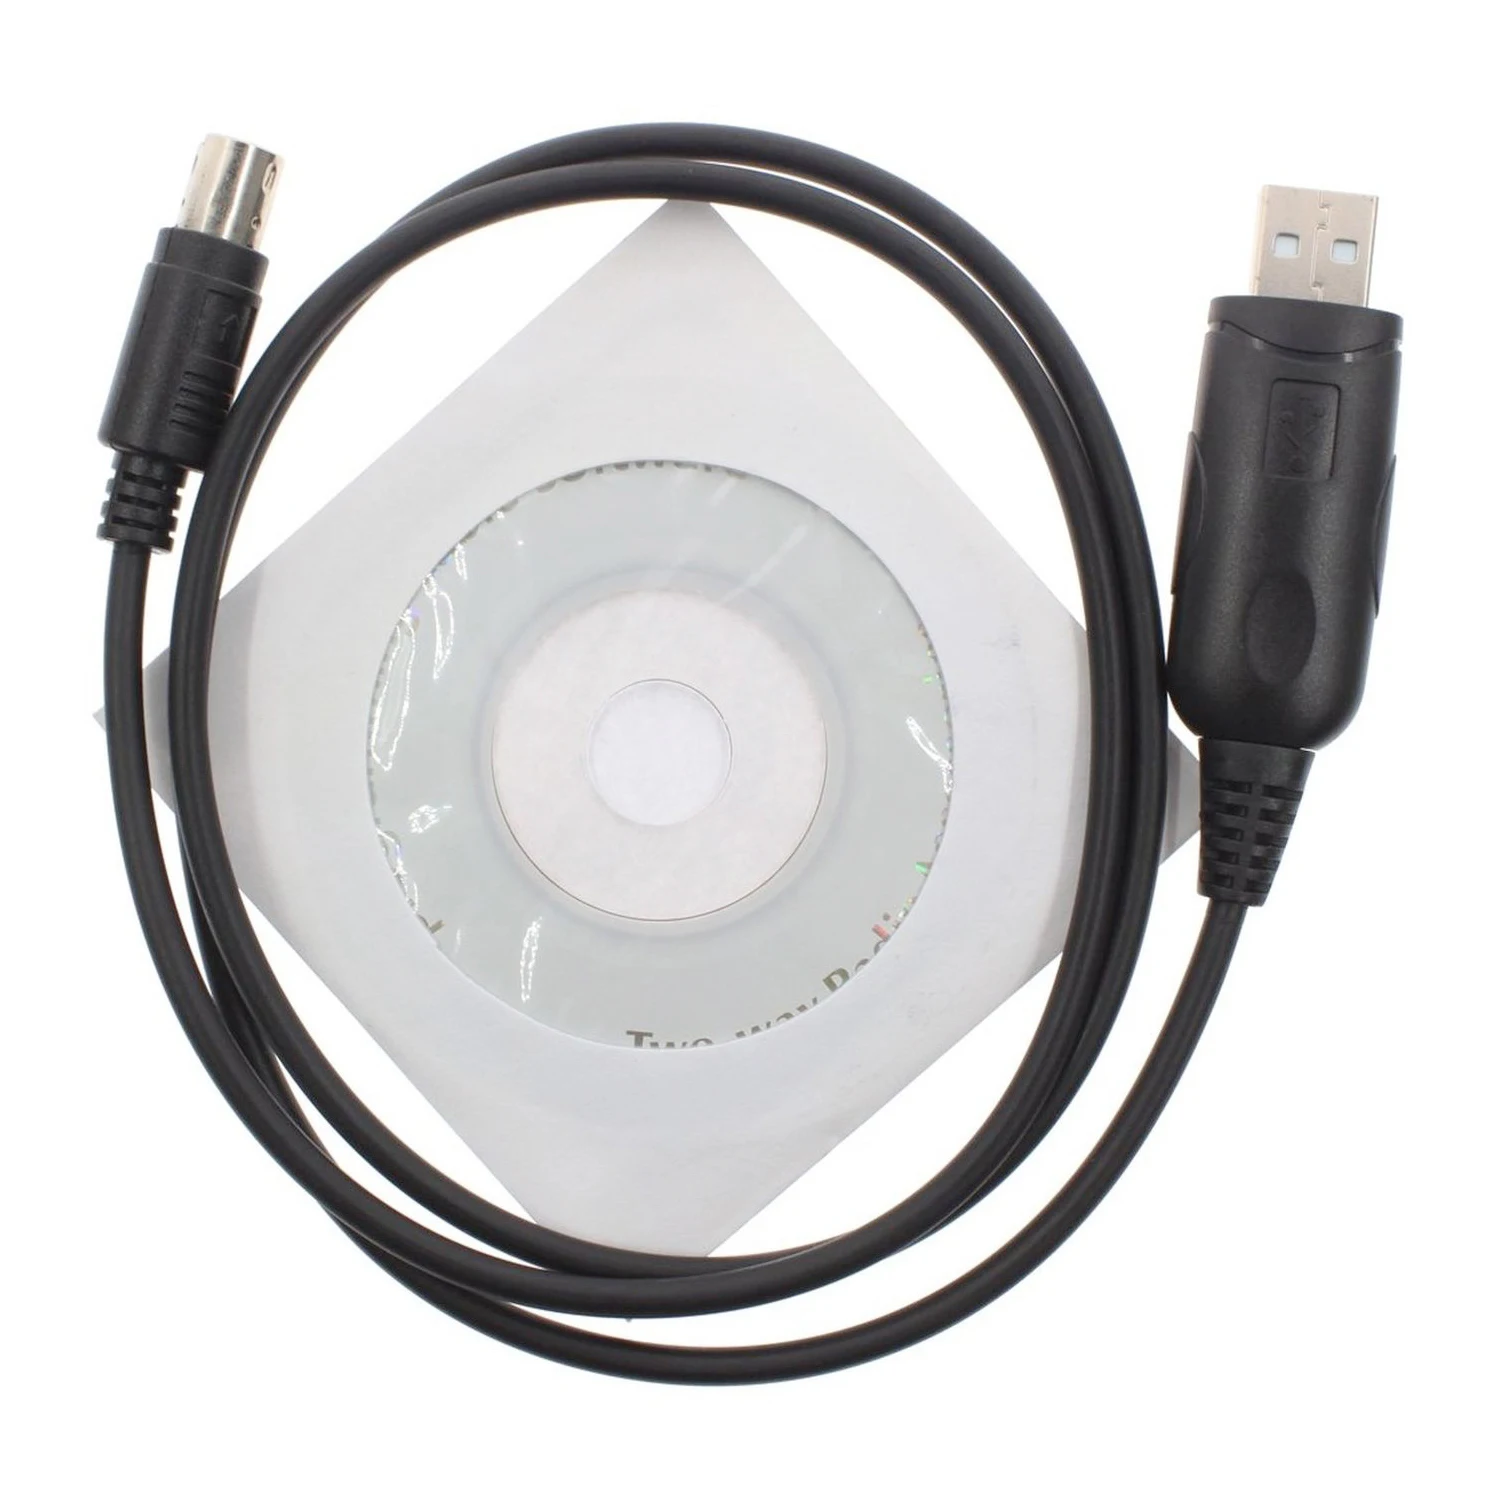 CT-62 кабель USB CAT для FT-100/FT-817/FT-857D/FT-897D/FT-100D/FT-817ND - Цвет: Black